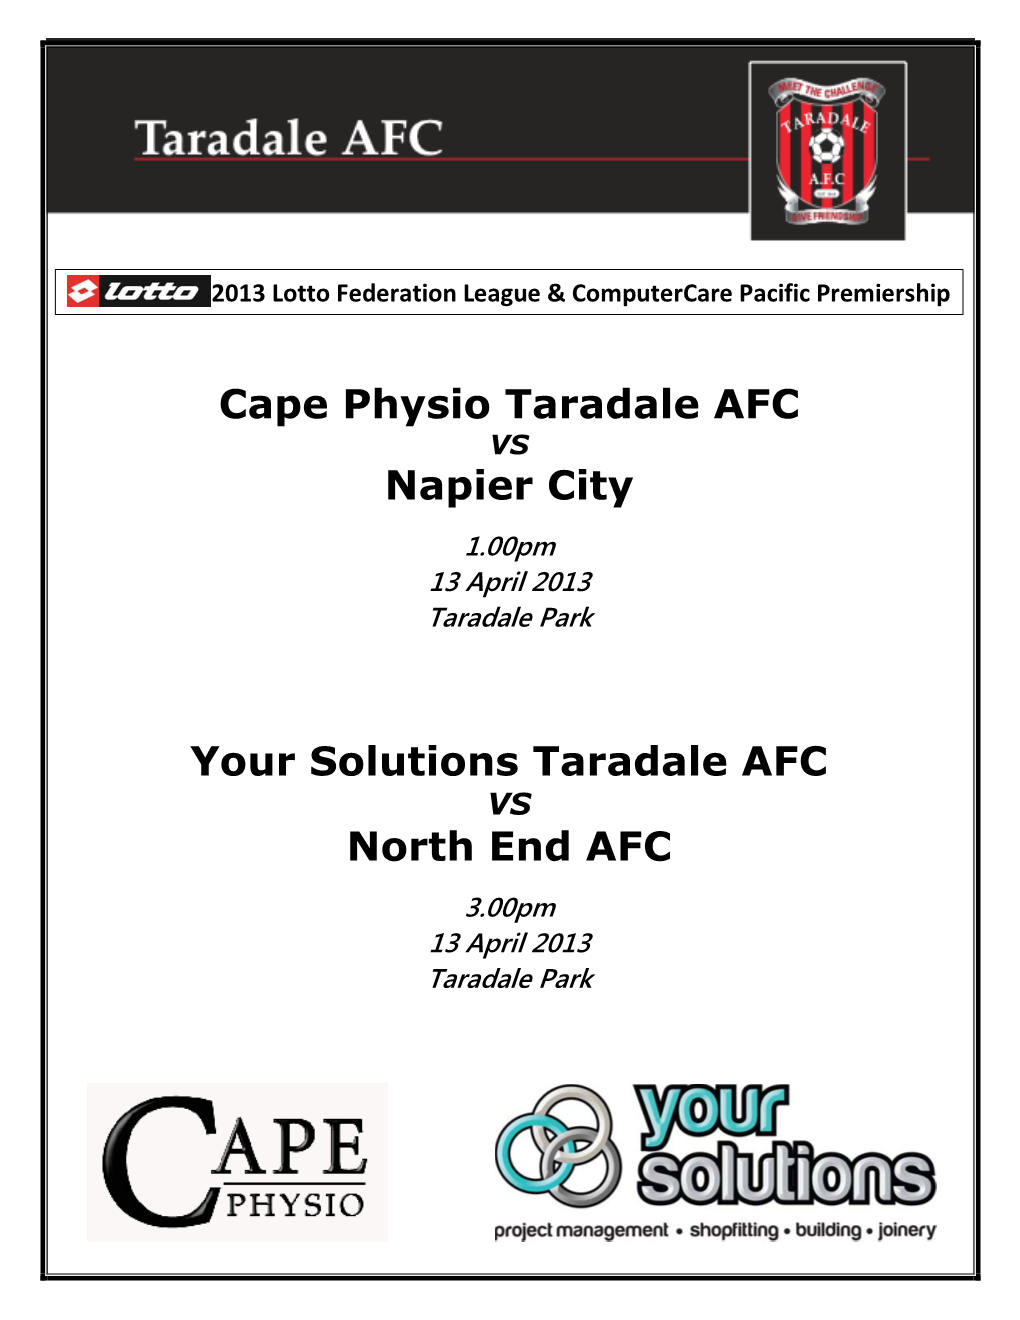 Cape Physio Taradale Vs Napier City